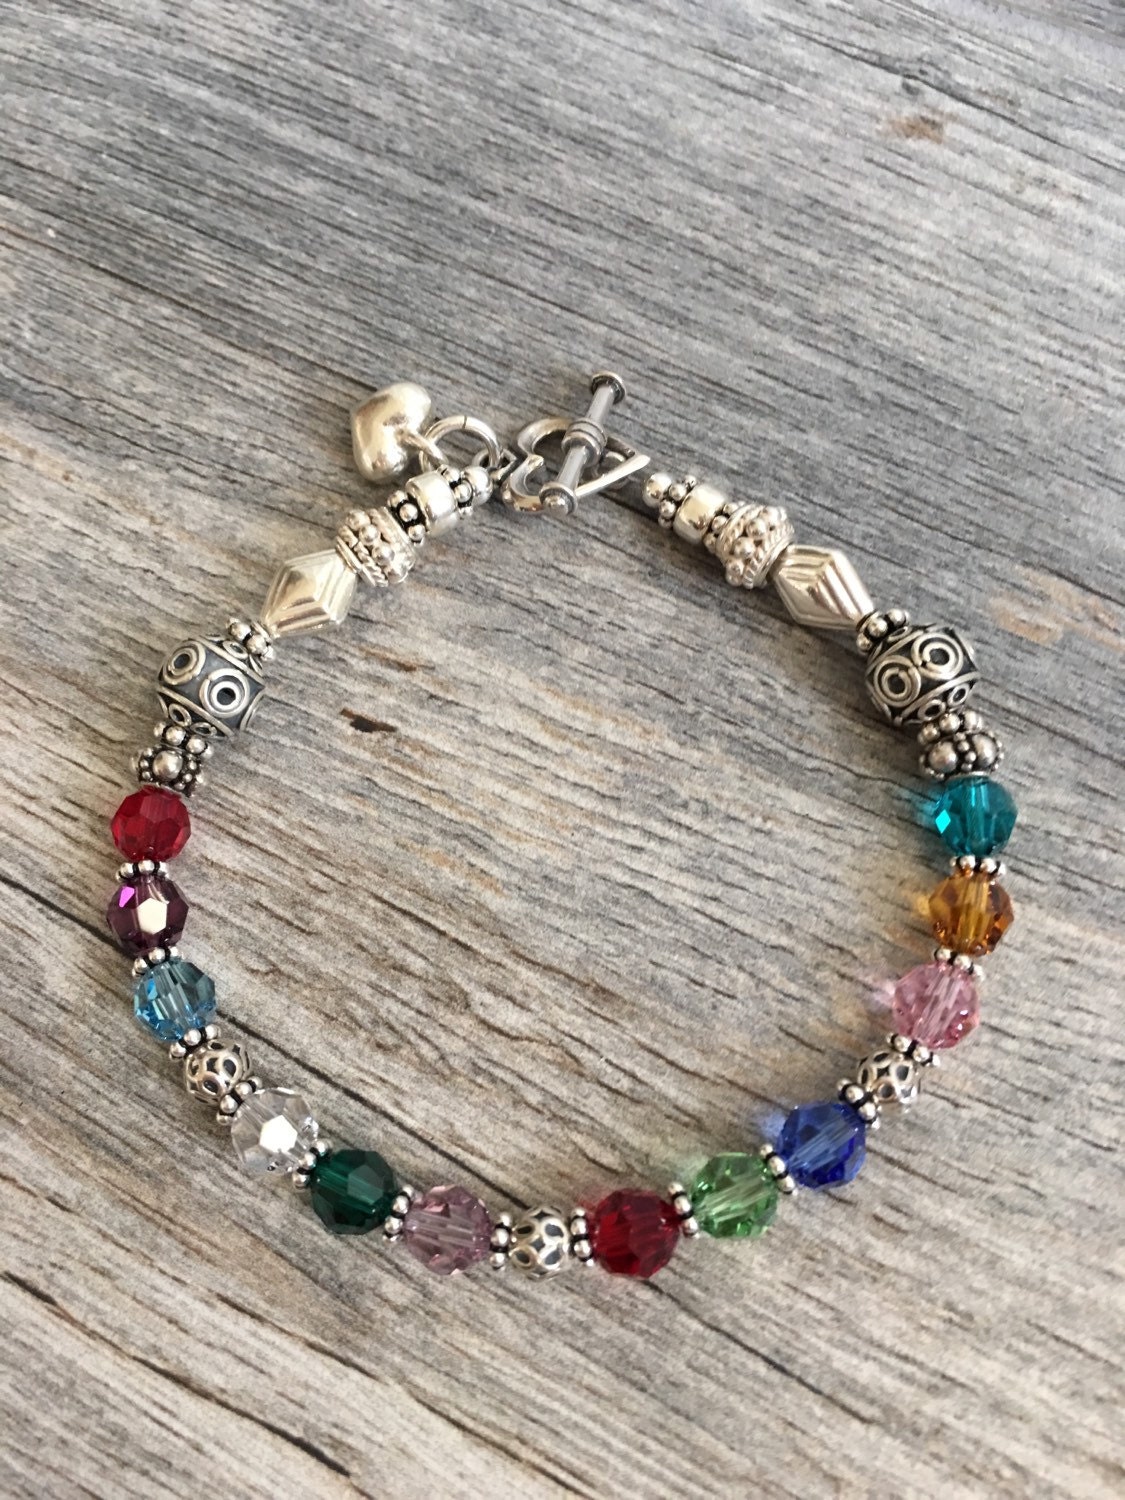 Birthstone bracelet / gift for grandma / personalized jewelry | Etsy